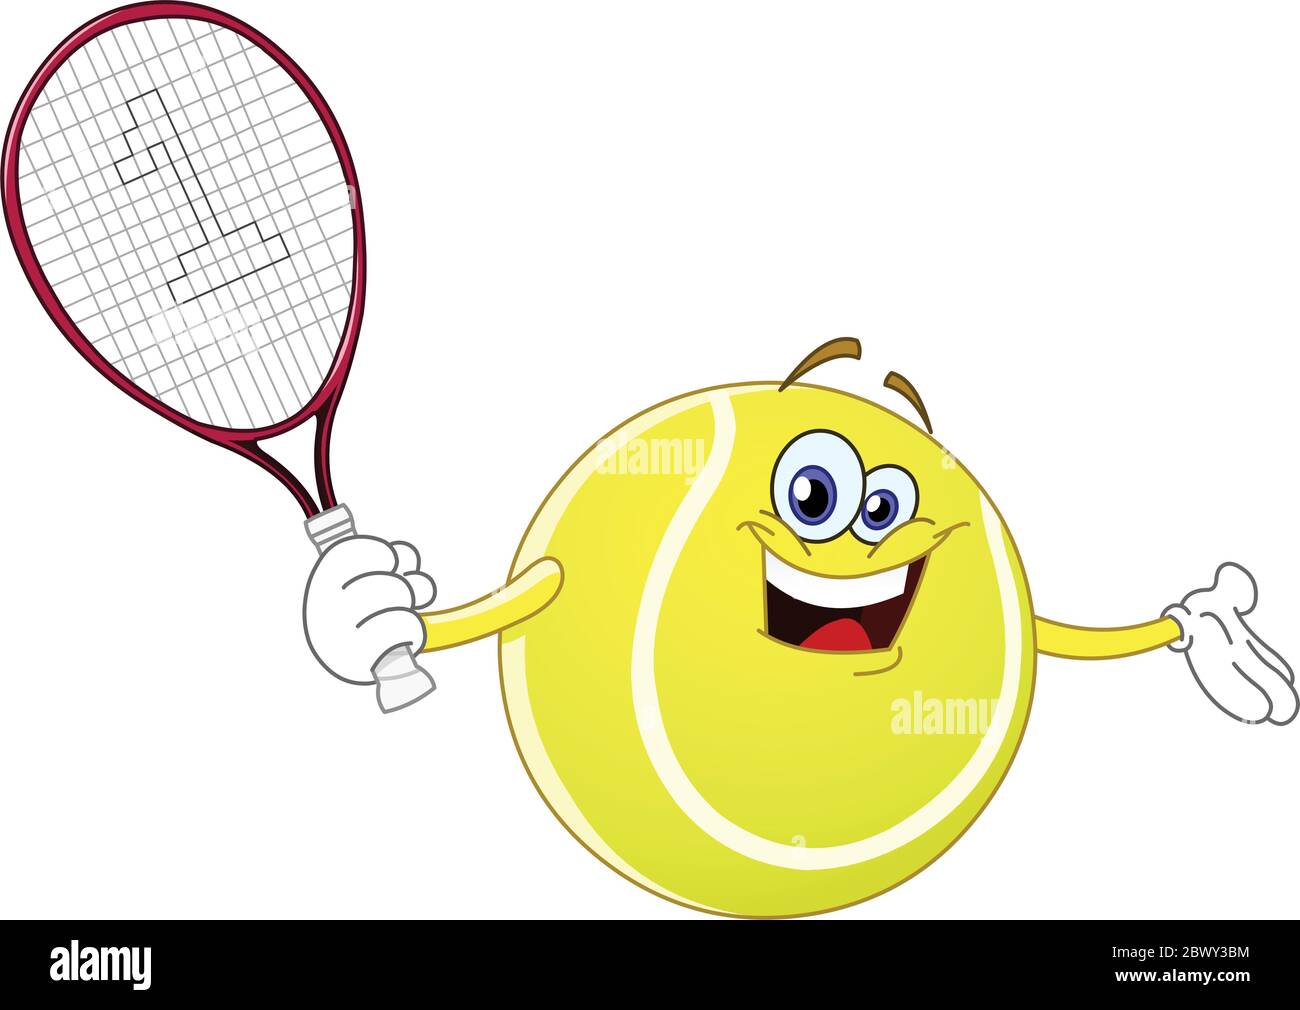 Cartoon tennis ball holding his racket Stock Vector